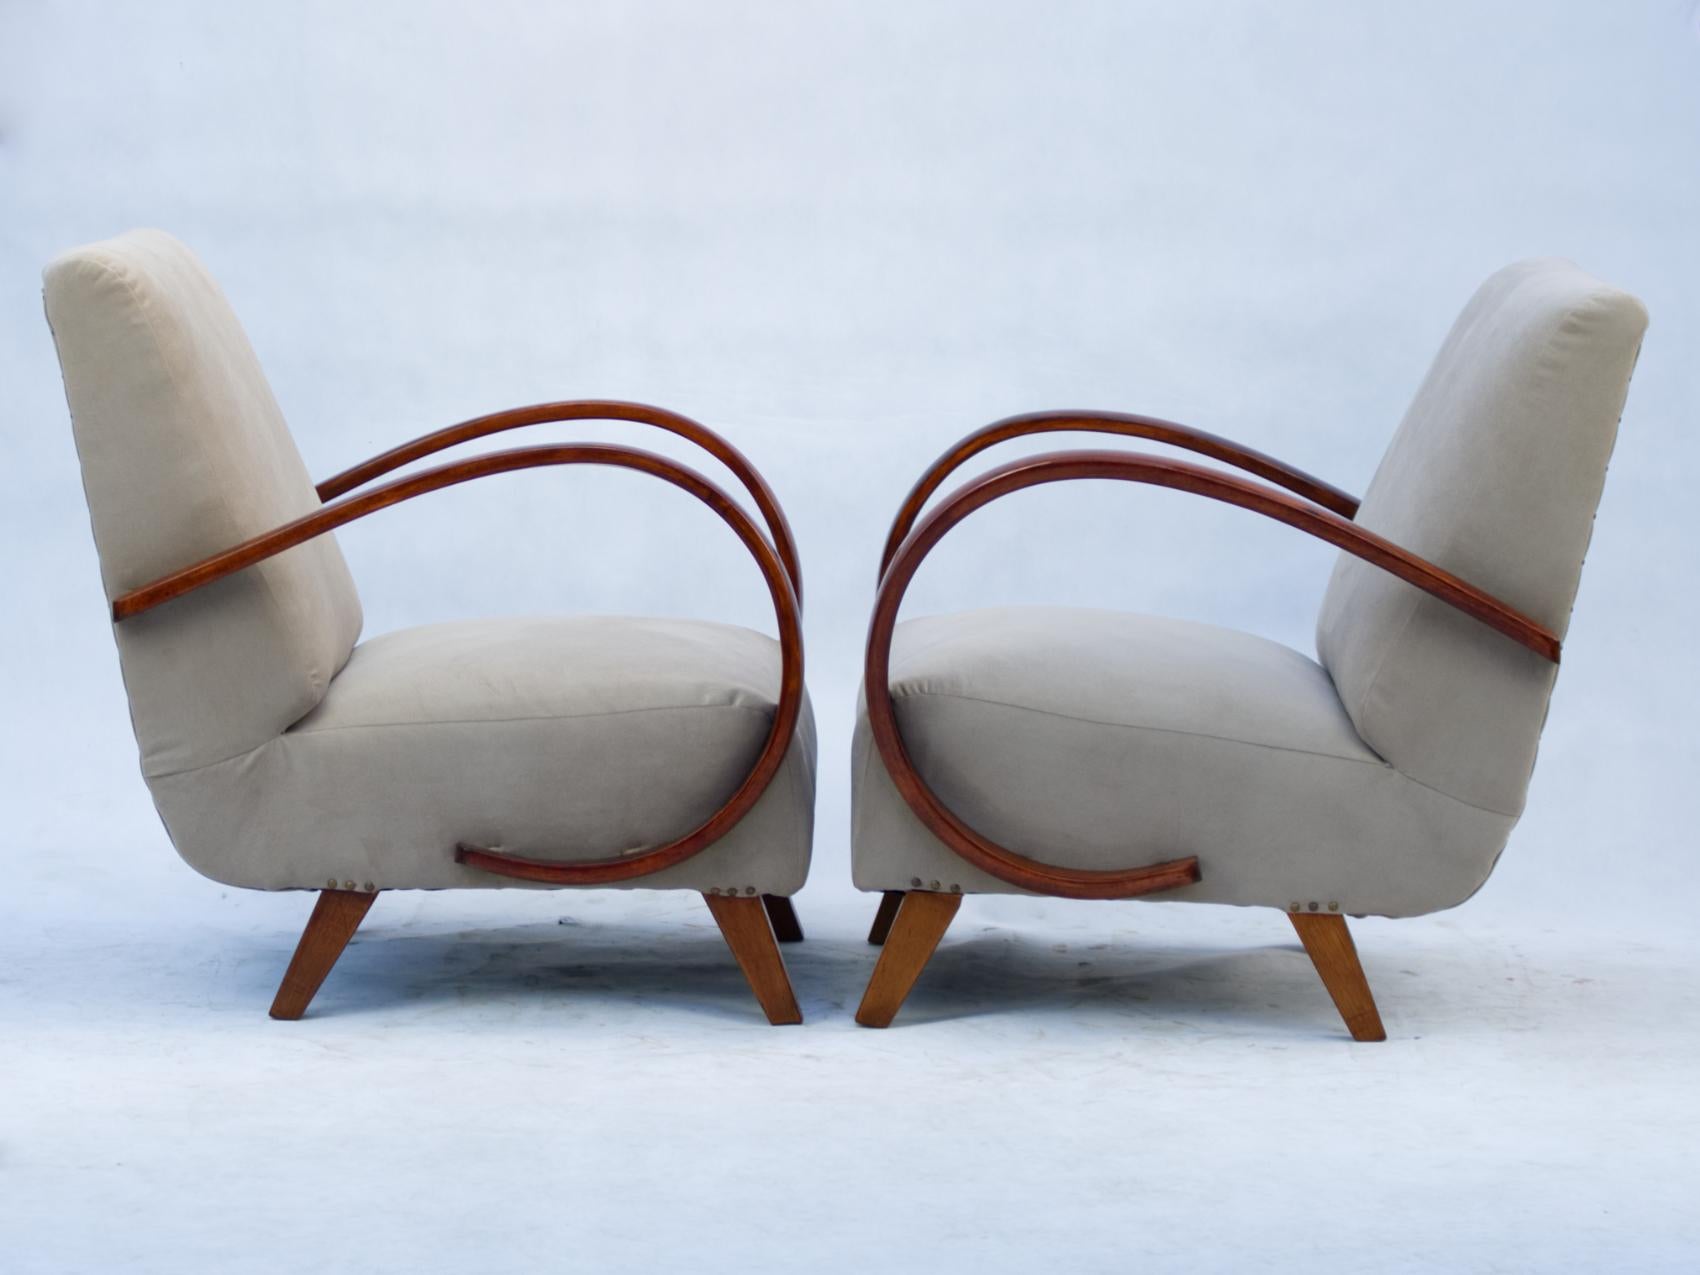 Czech Art Deco Lounge Chairs by Jindrich Halabala for UP Zavody Brno, 1930s